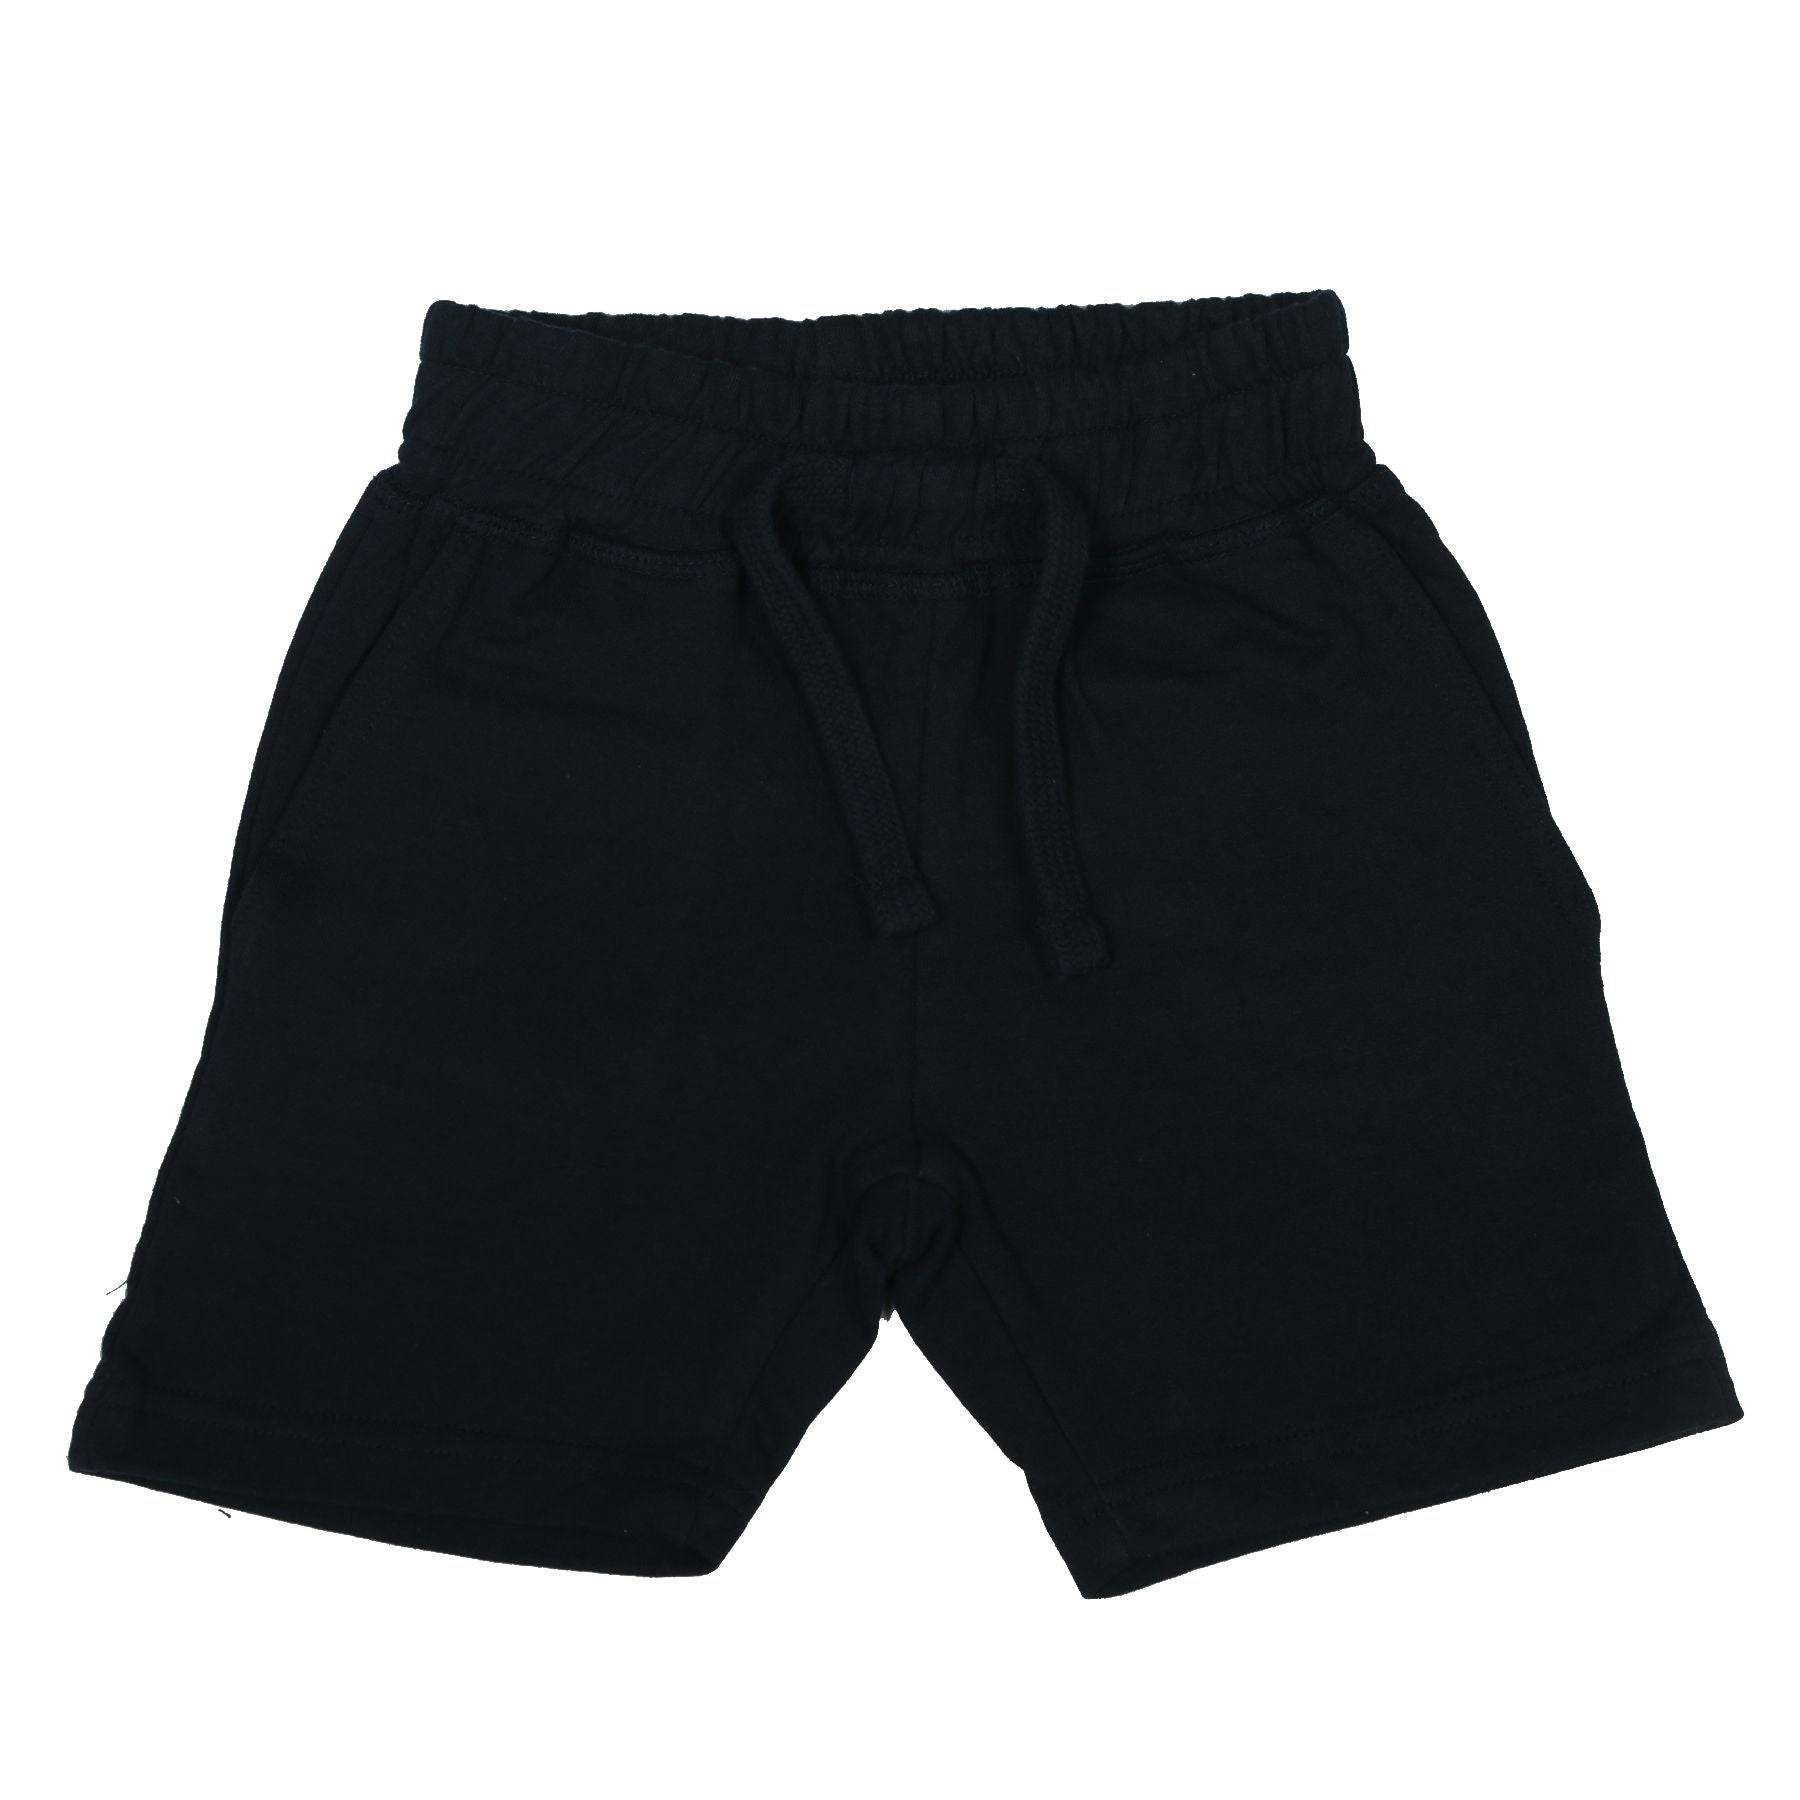 Distressed Black Shorts - Twinkle Twinkle Little One